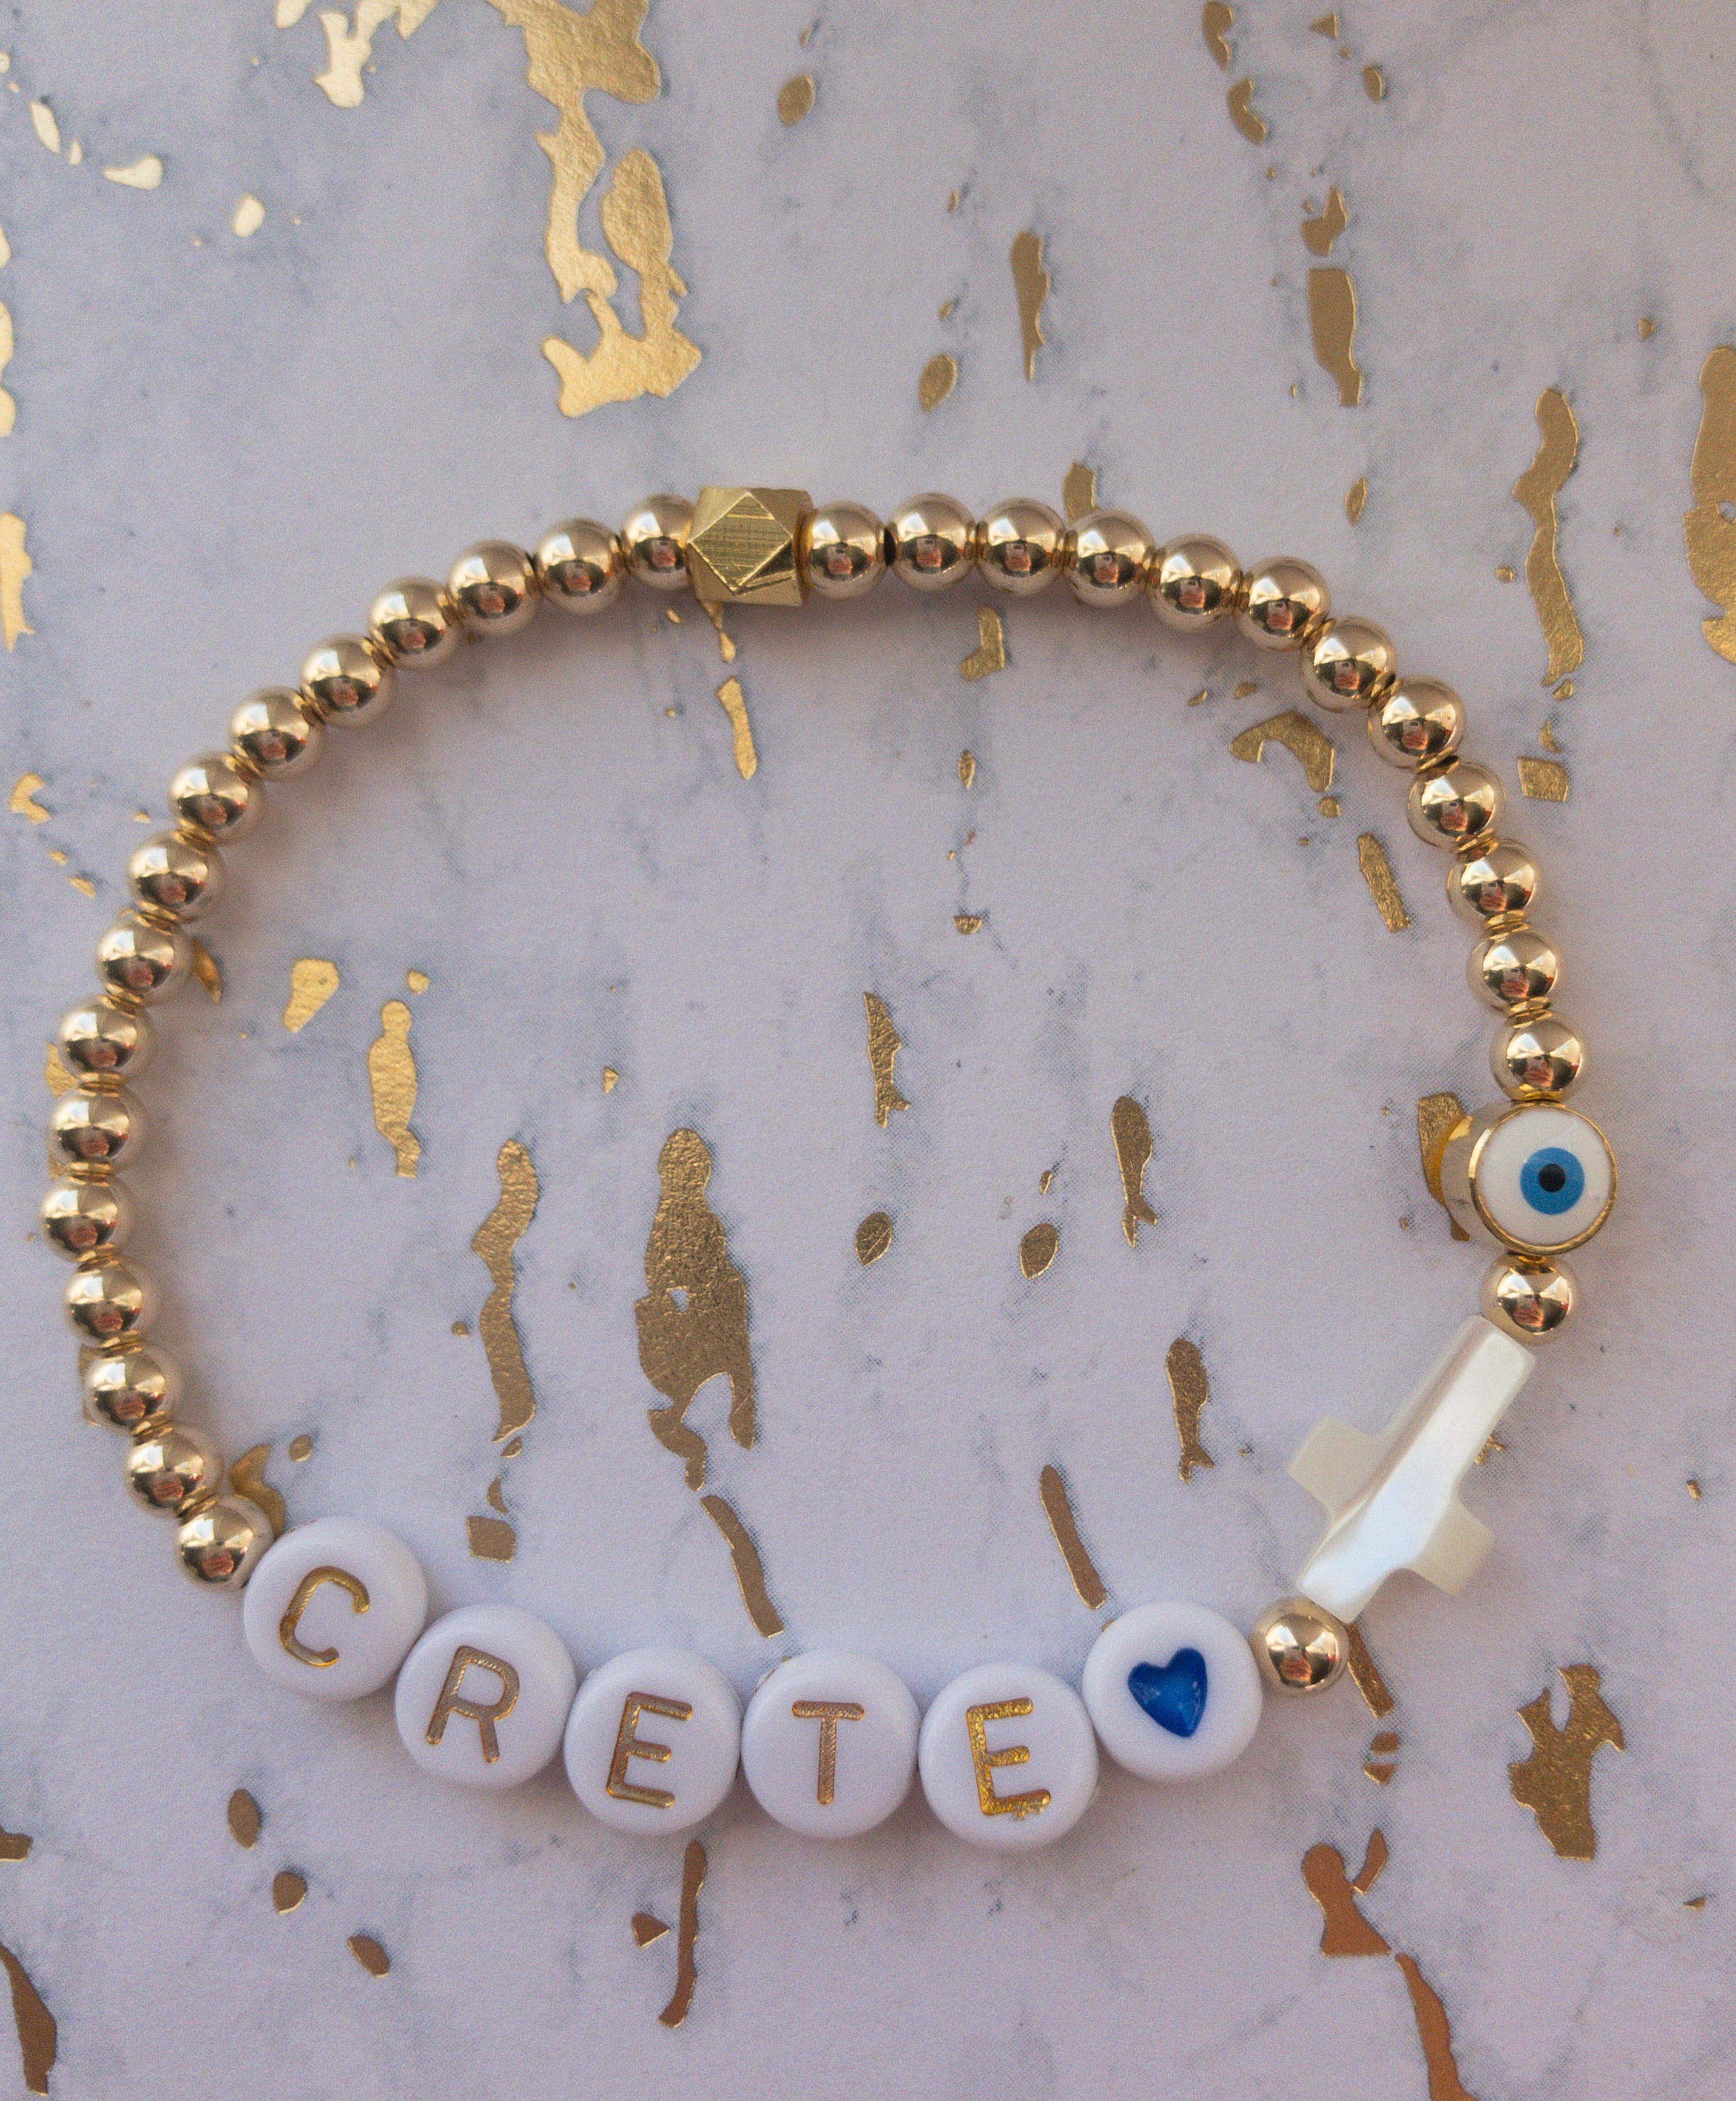 Crete Bracelet - Rania Dabagh Jewelry